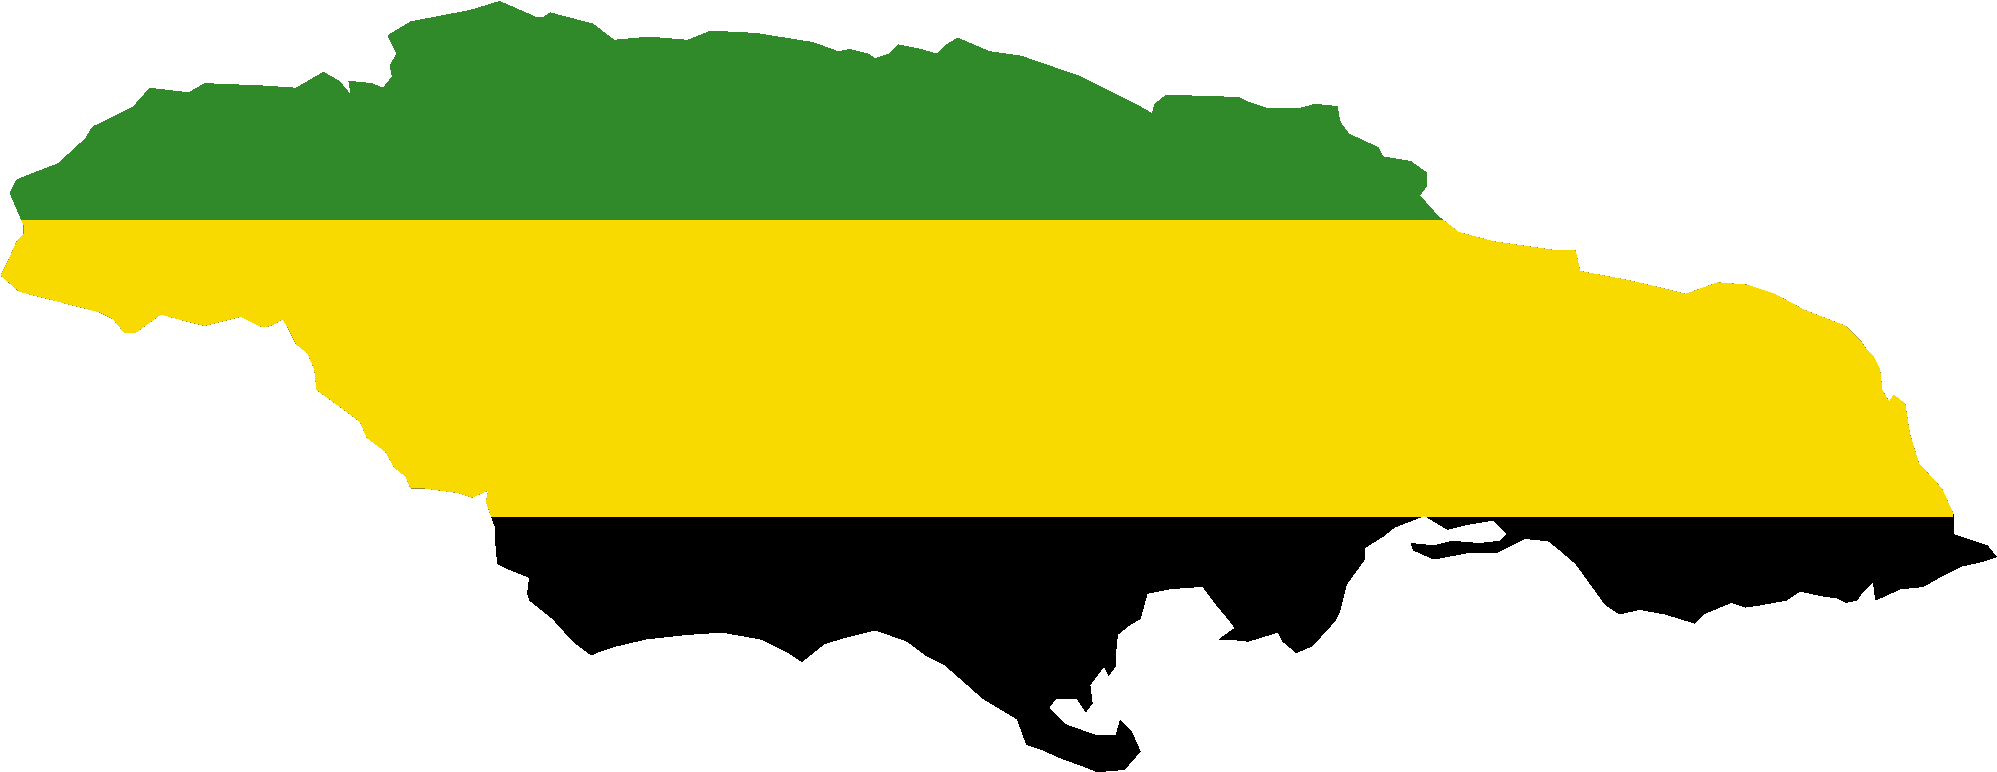 Jamaica Map Silhouette Green Yellow Black